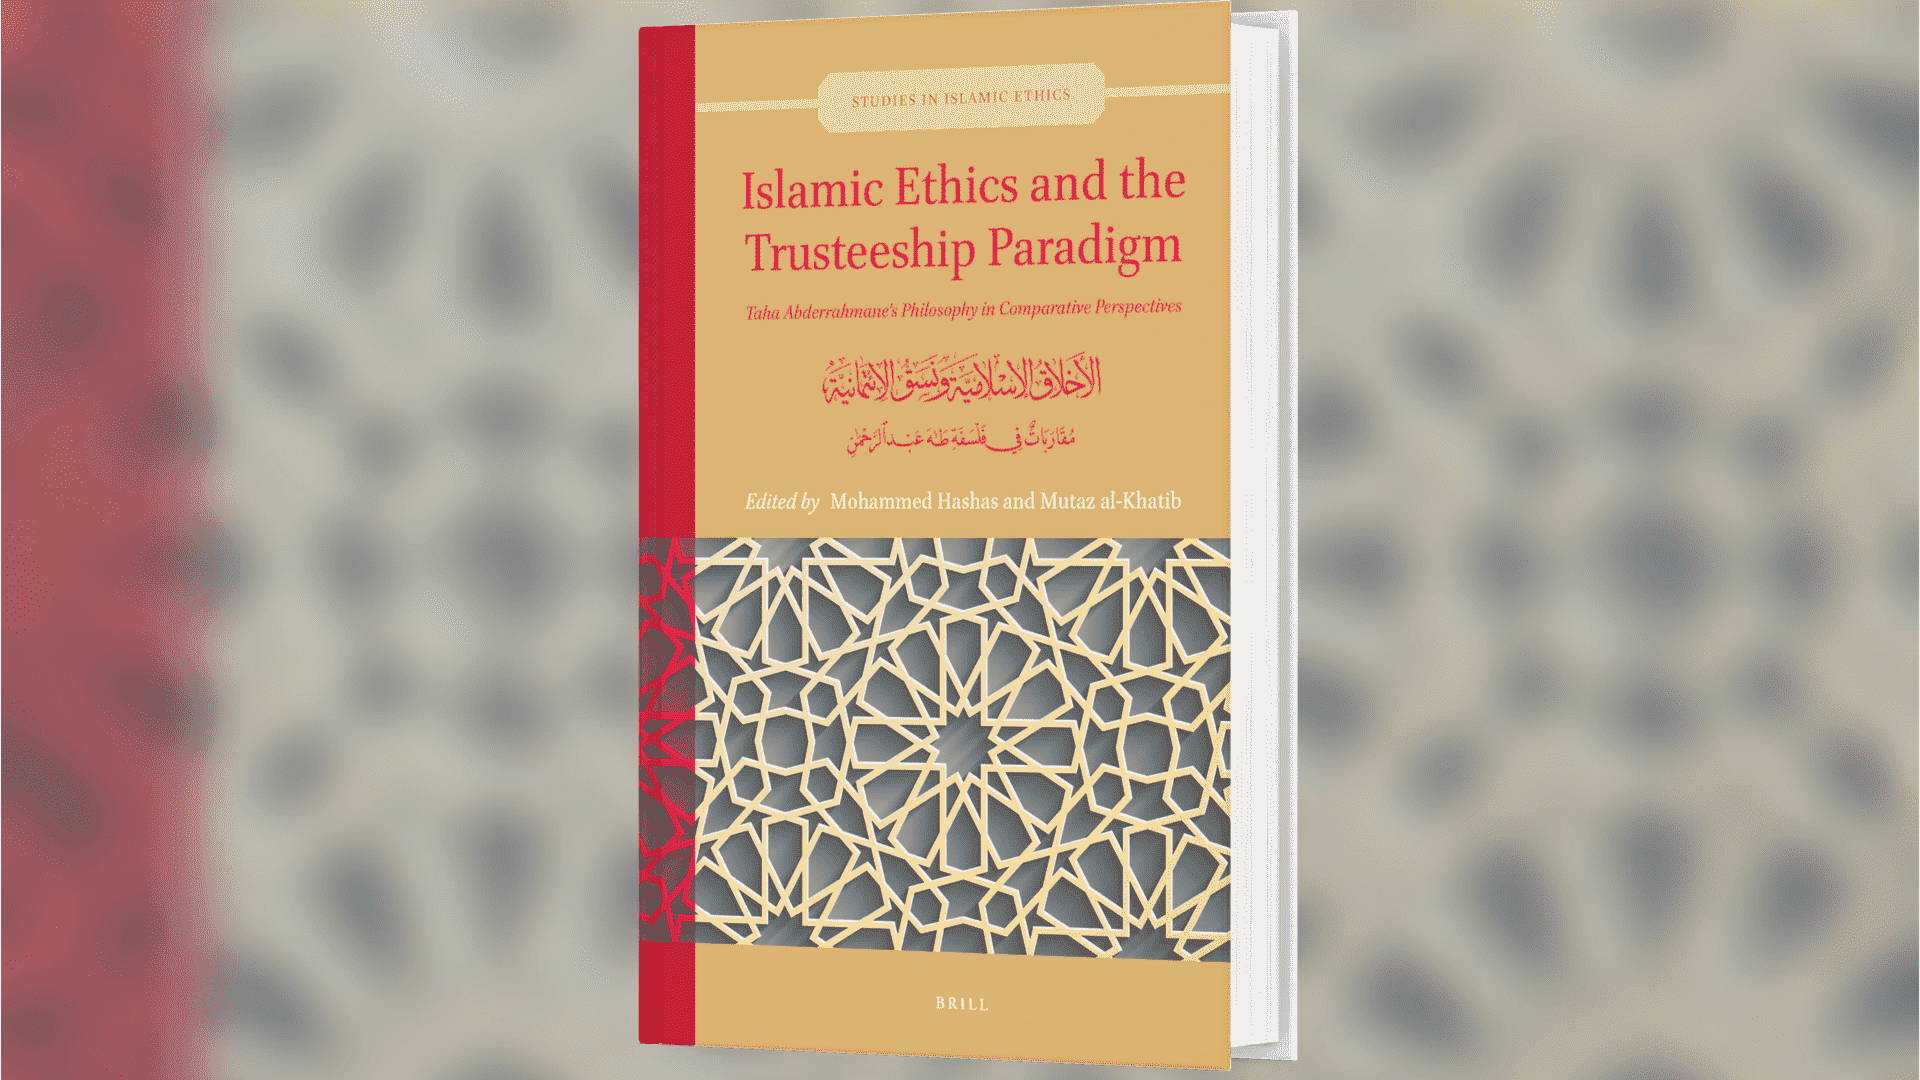 New Publication: Islamic Ethics and the Trusteeship Paradigm